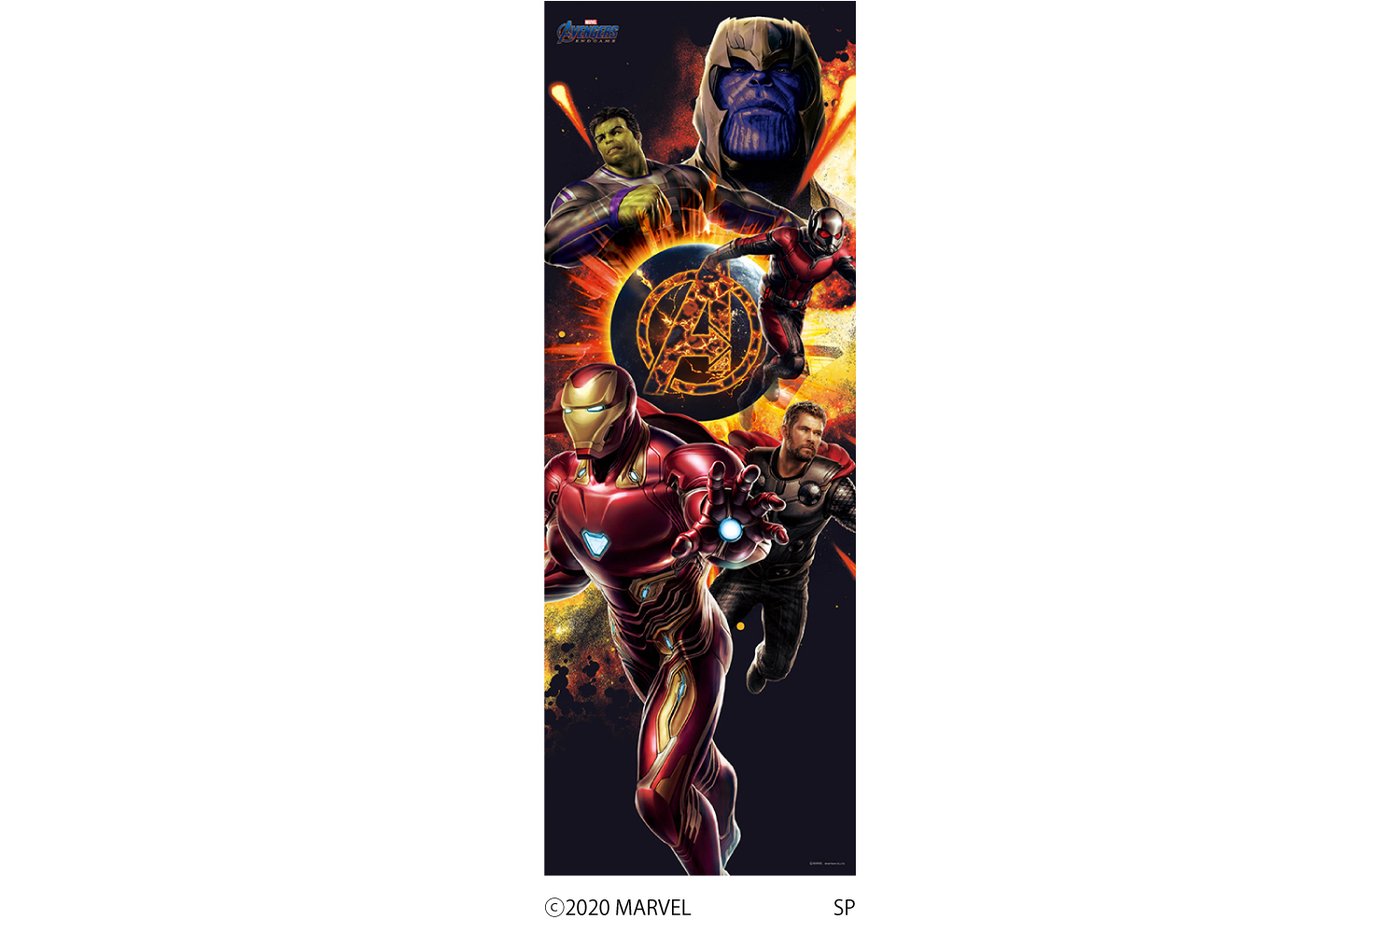 Marvel マーベル Avengers Endgame 壁紙素材ウォールステッカー 2シートタイプ アイアンマン ハルク Wall Paper M019 2 プリテック Medfited Org